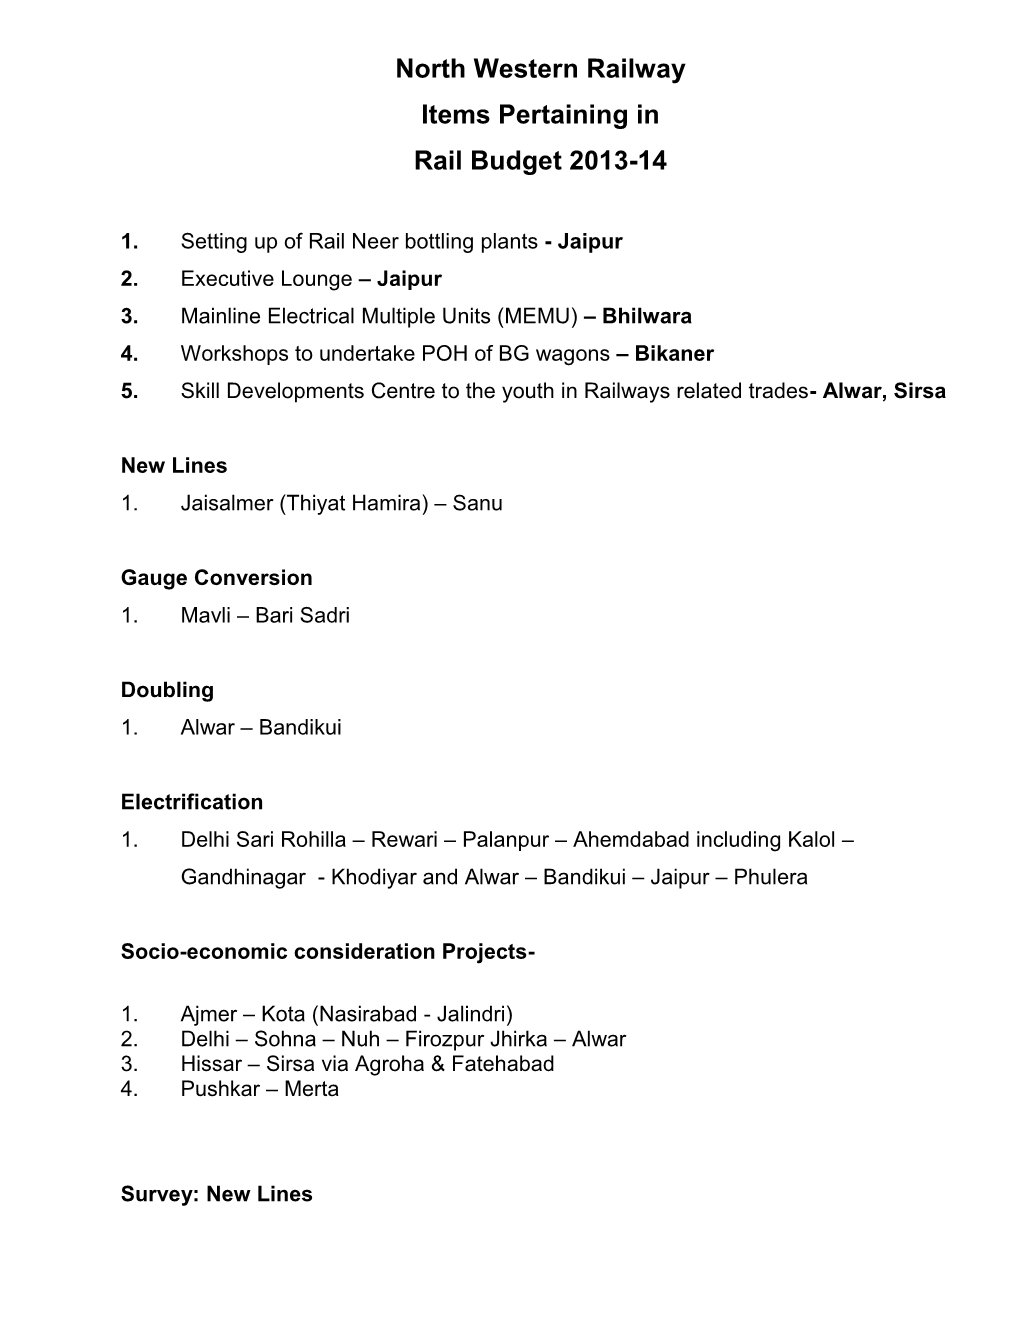 North Western Railway Items Pertaining in Rail Budget 2013-14